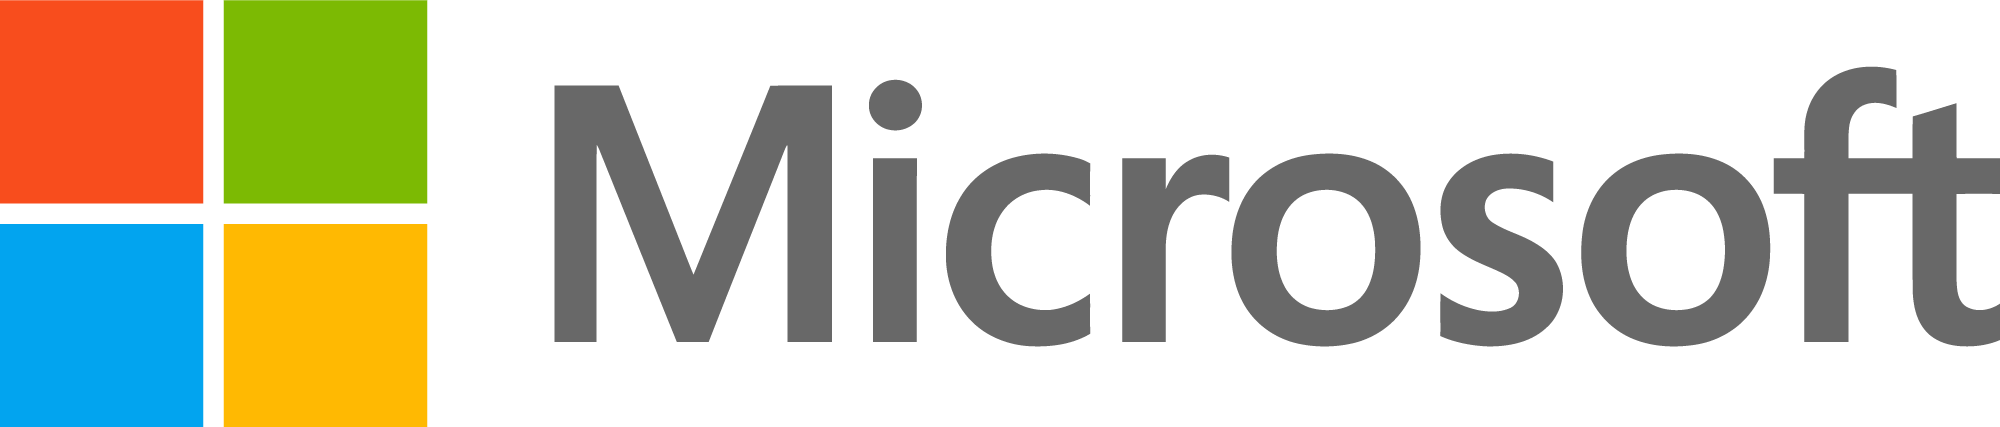 1656618586microsoft-logo-png.png